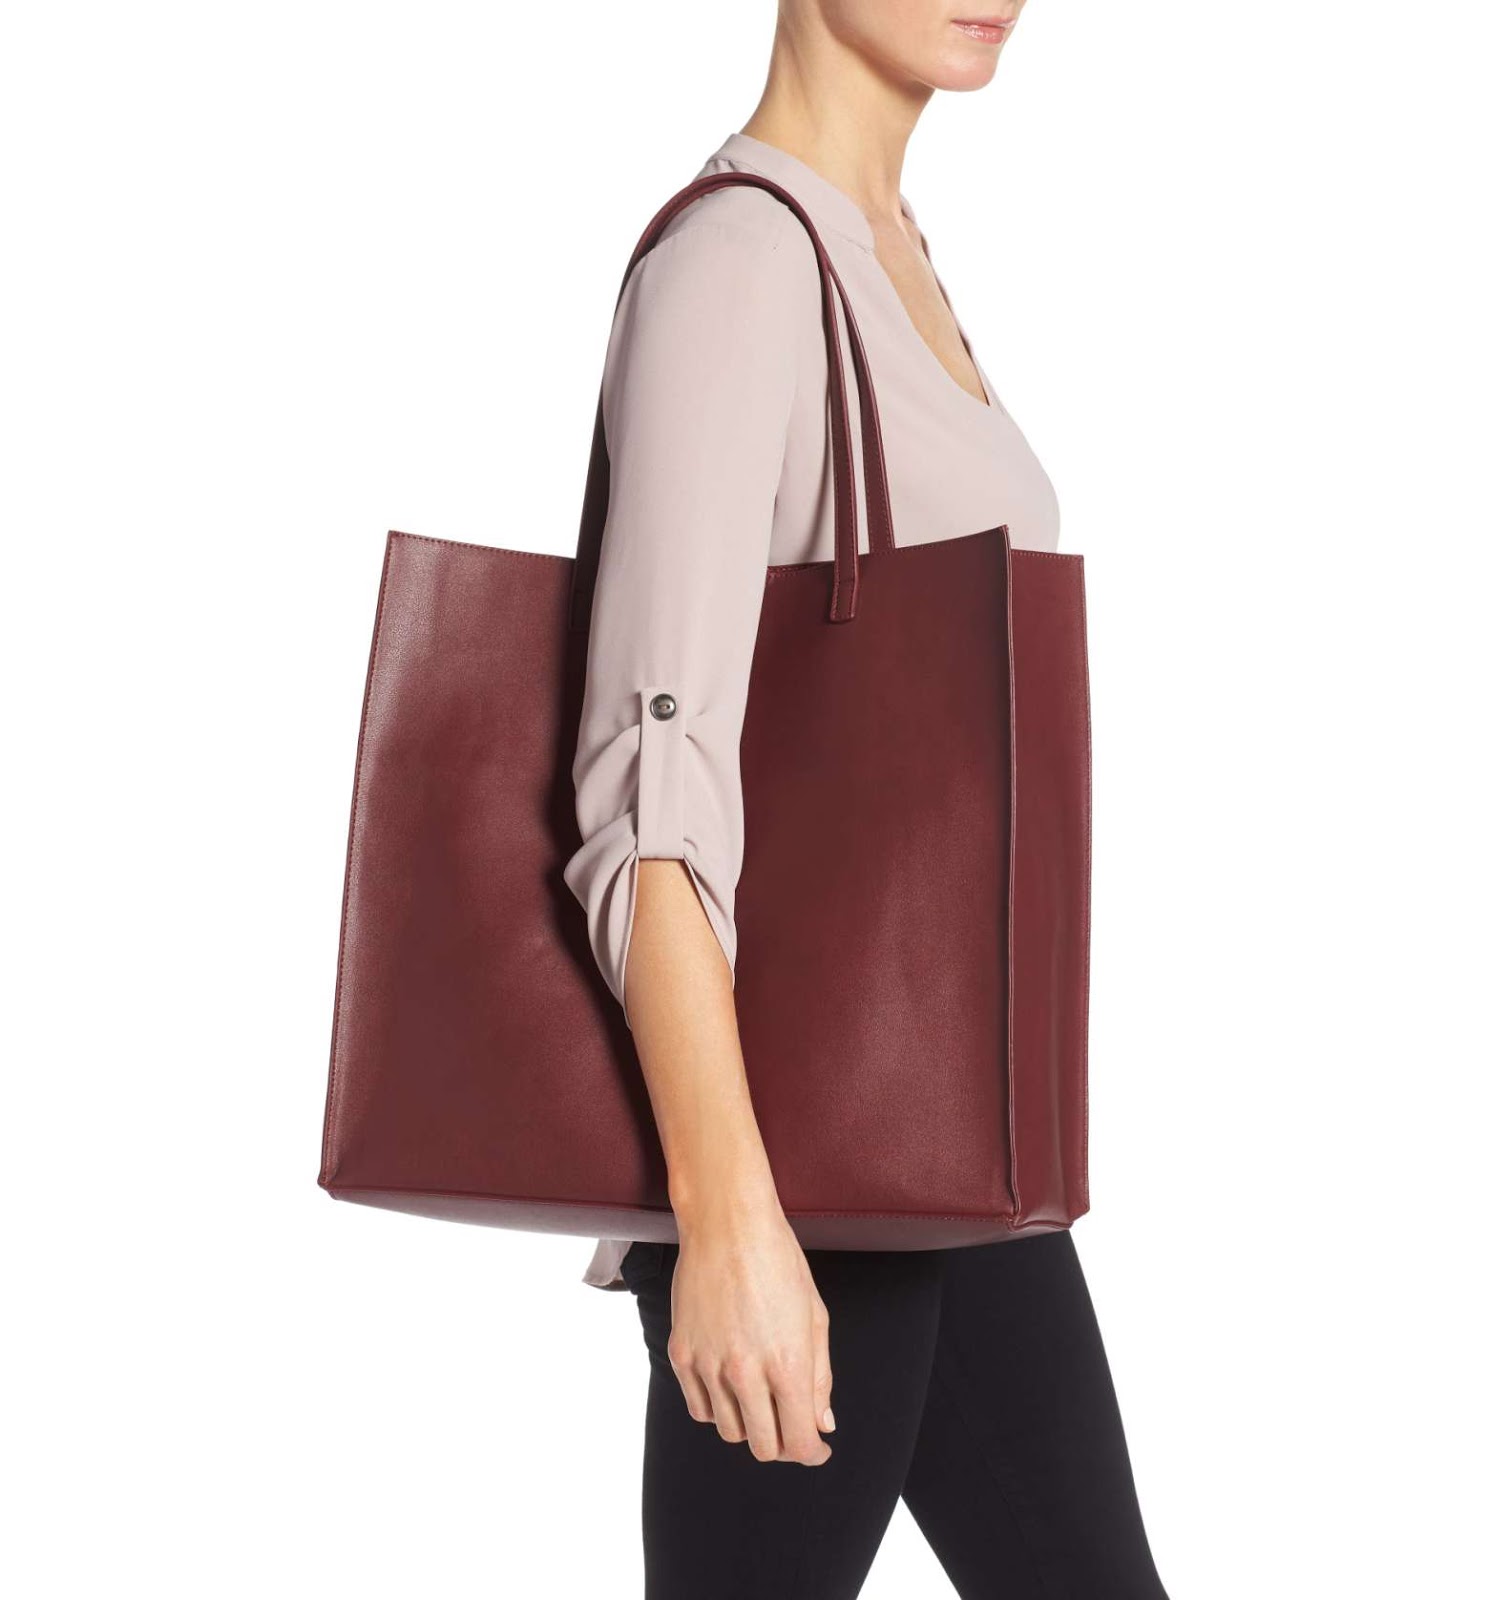 My Favorite Bags - Marlene Style